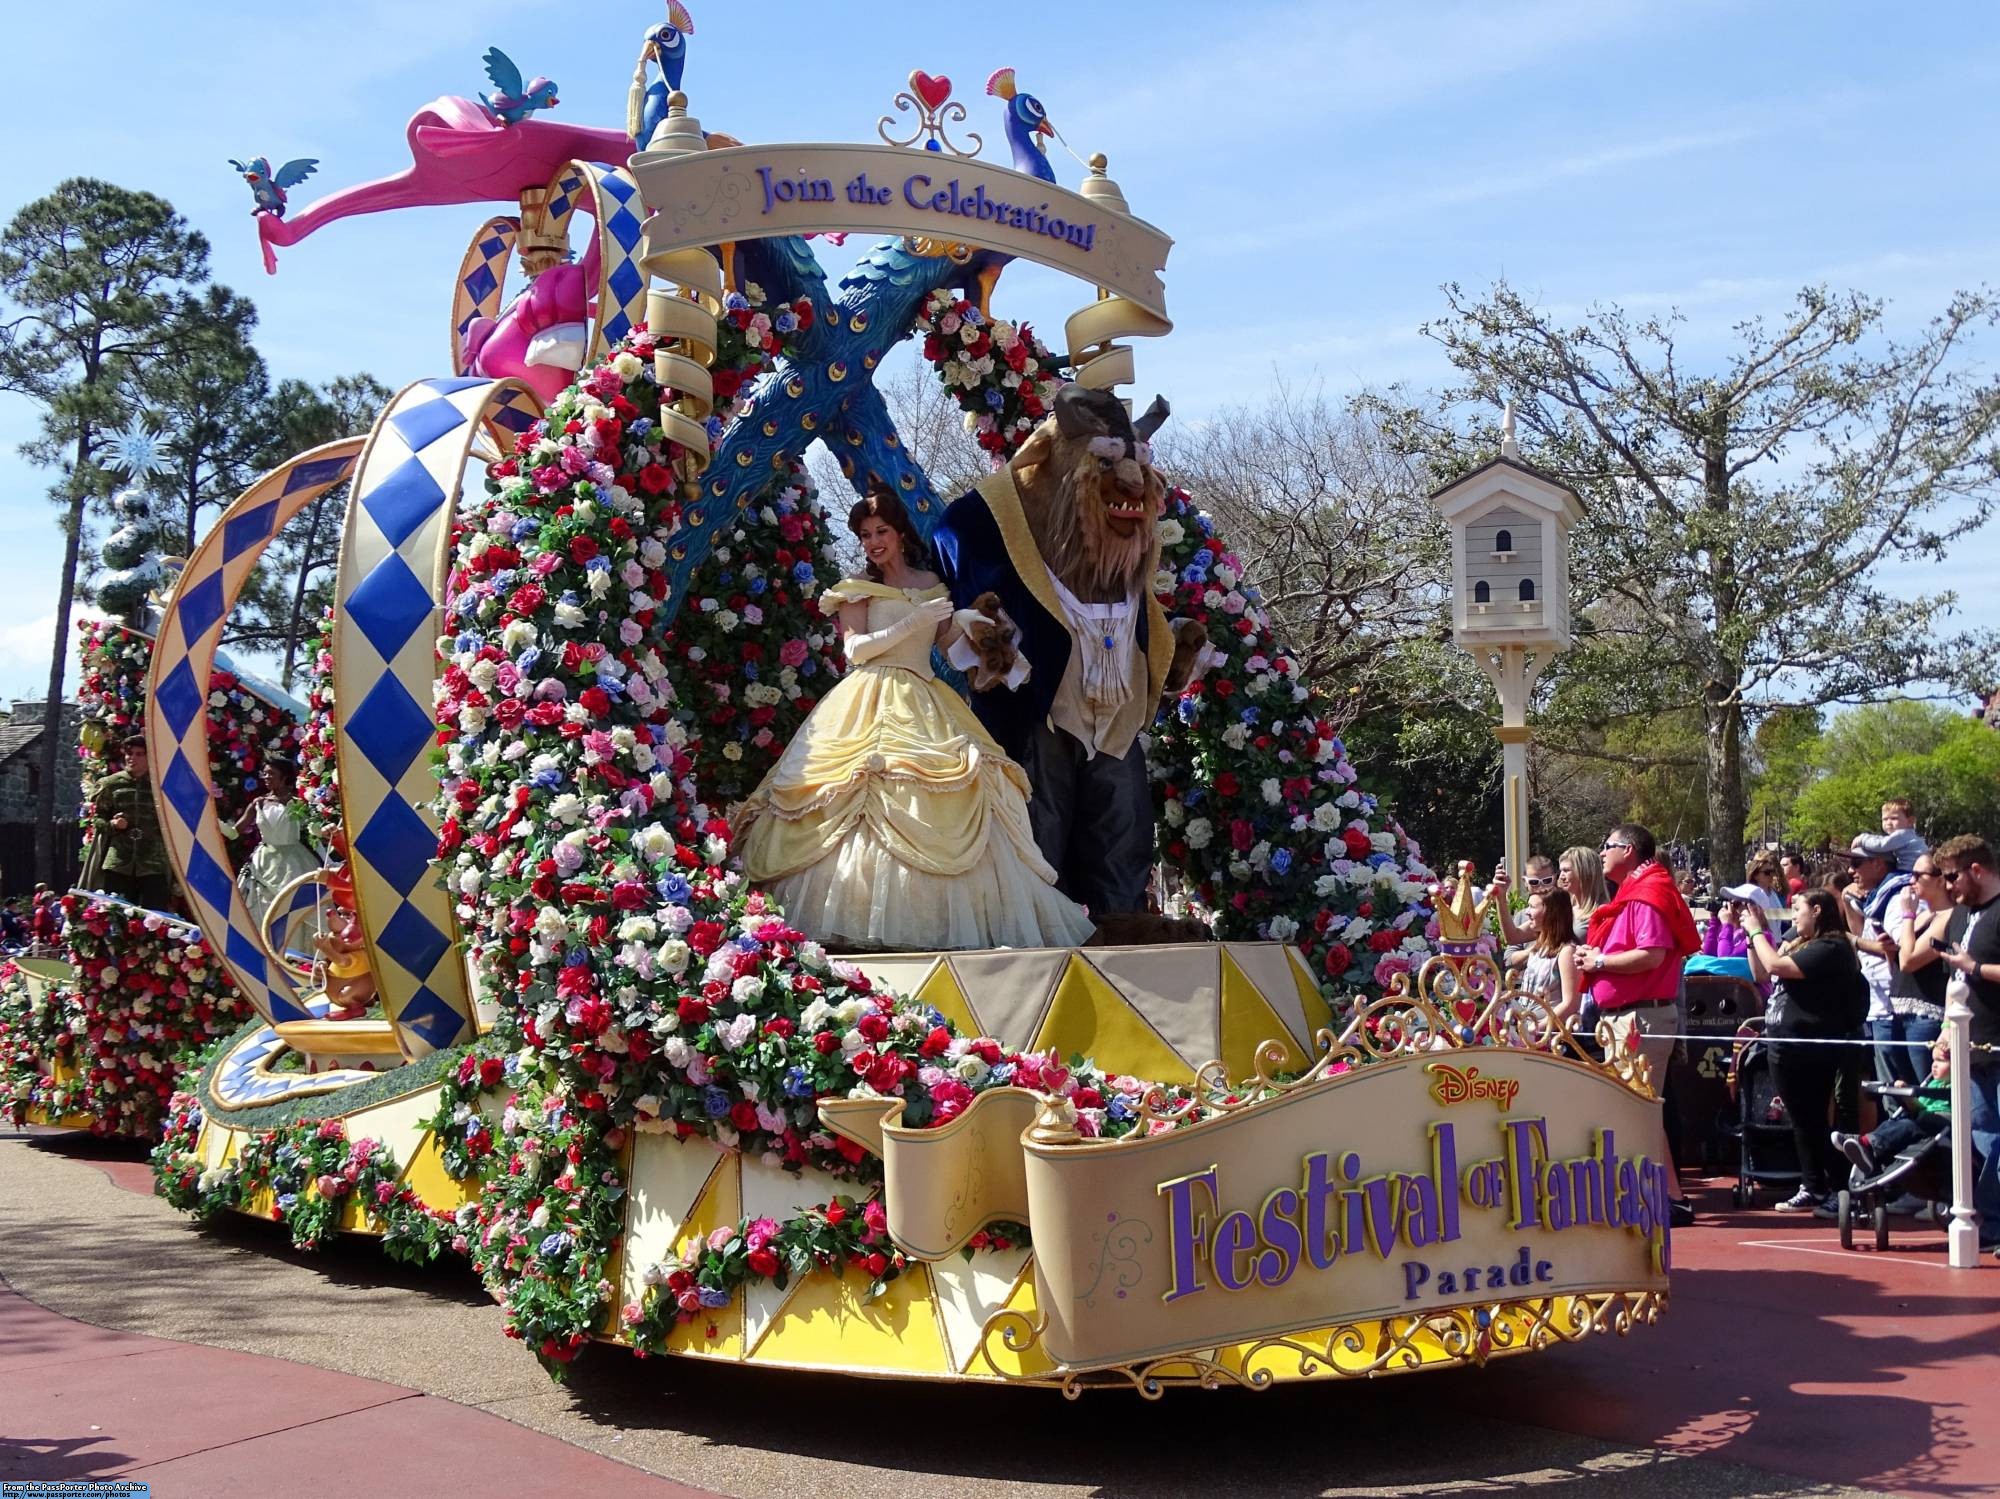 Magic Kingdom - Festival of Fantasy parade